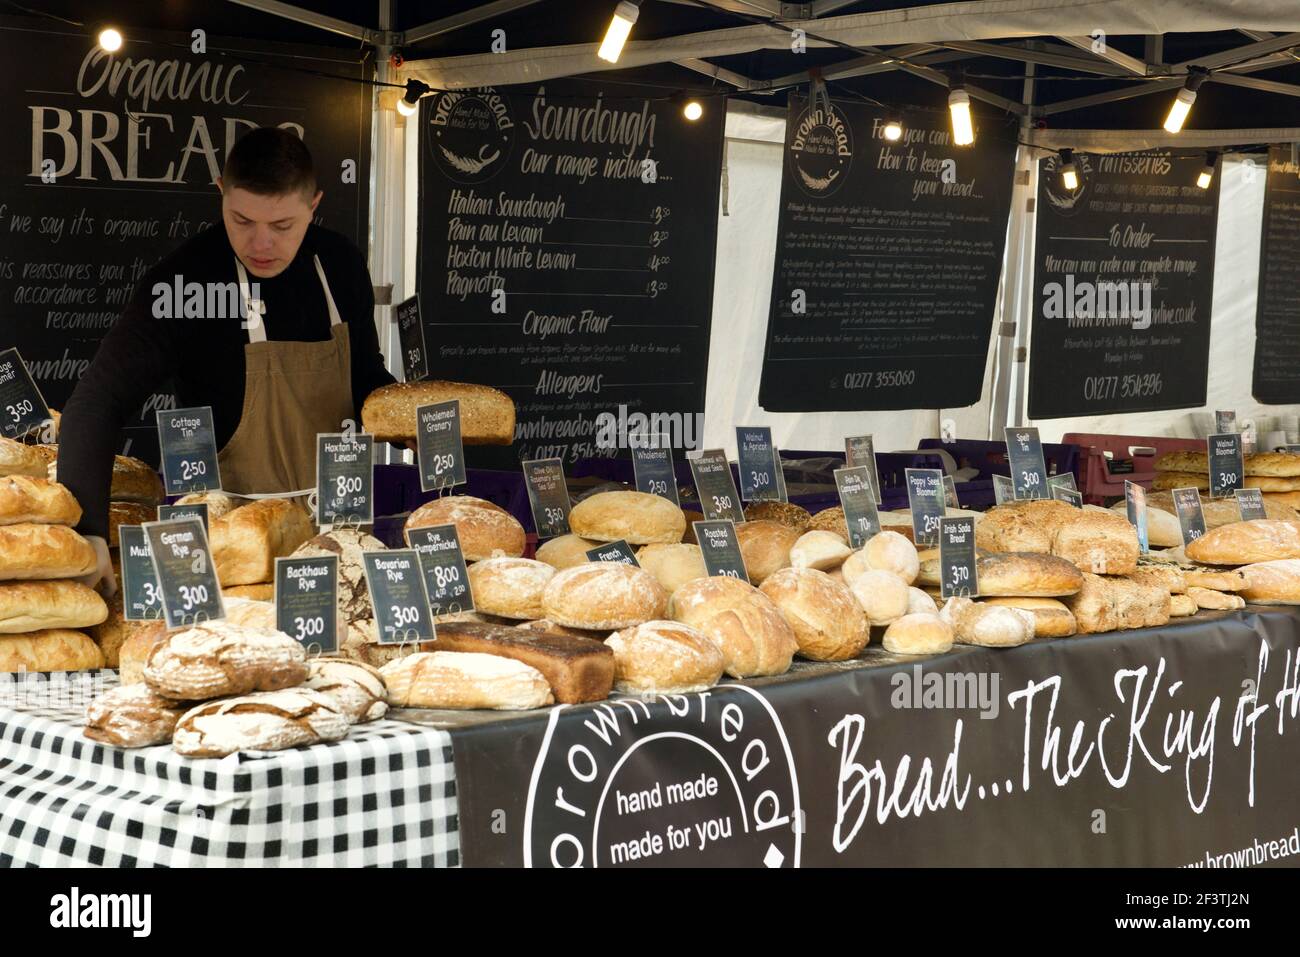 Organic bread stall, farmers Market, Wanstead, London Stock Photo